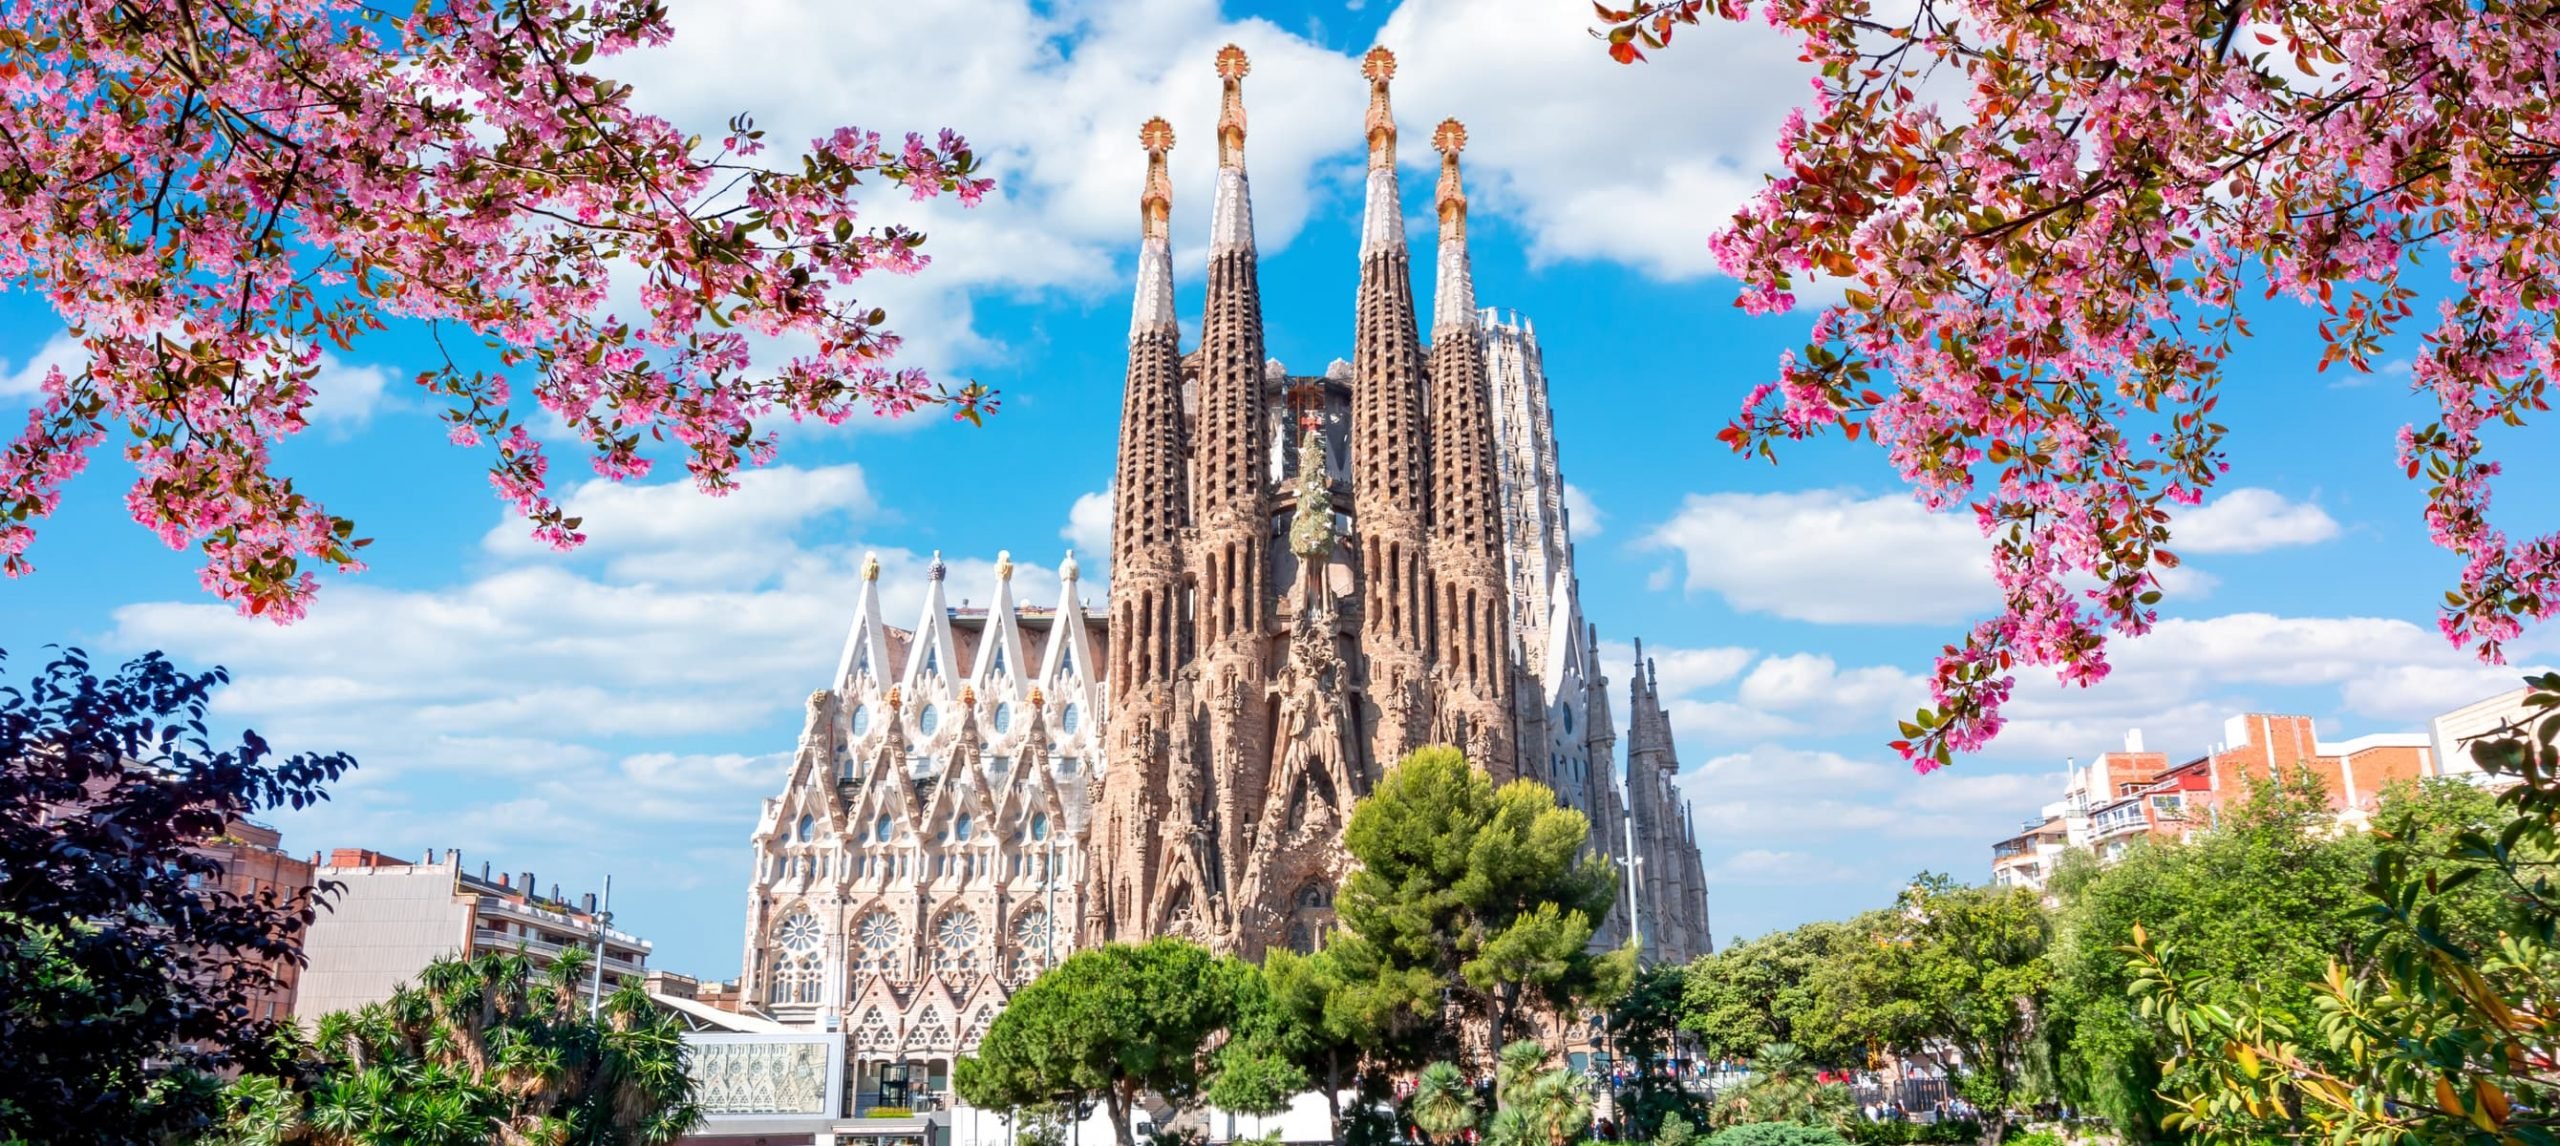 La Sagrada Familia Basilica during spring in Barcelona.